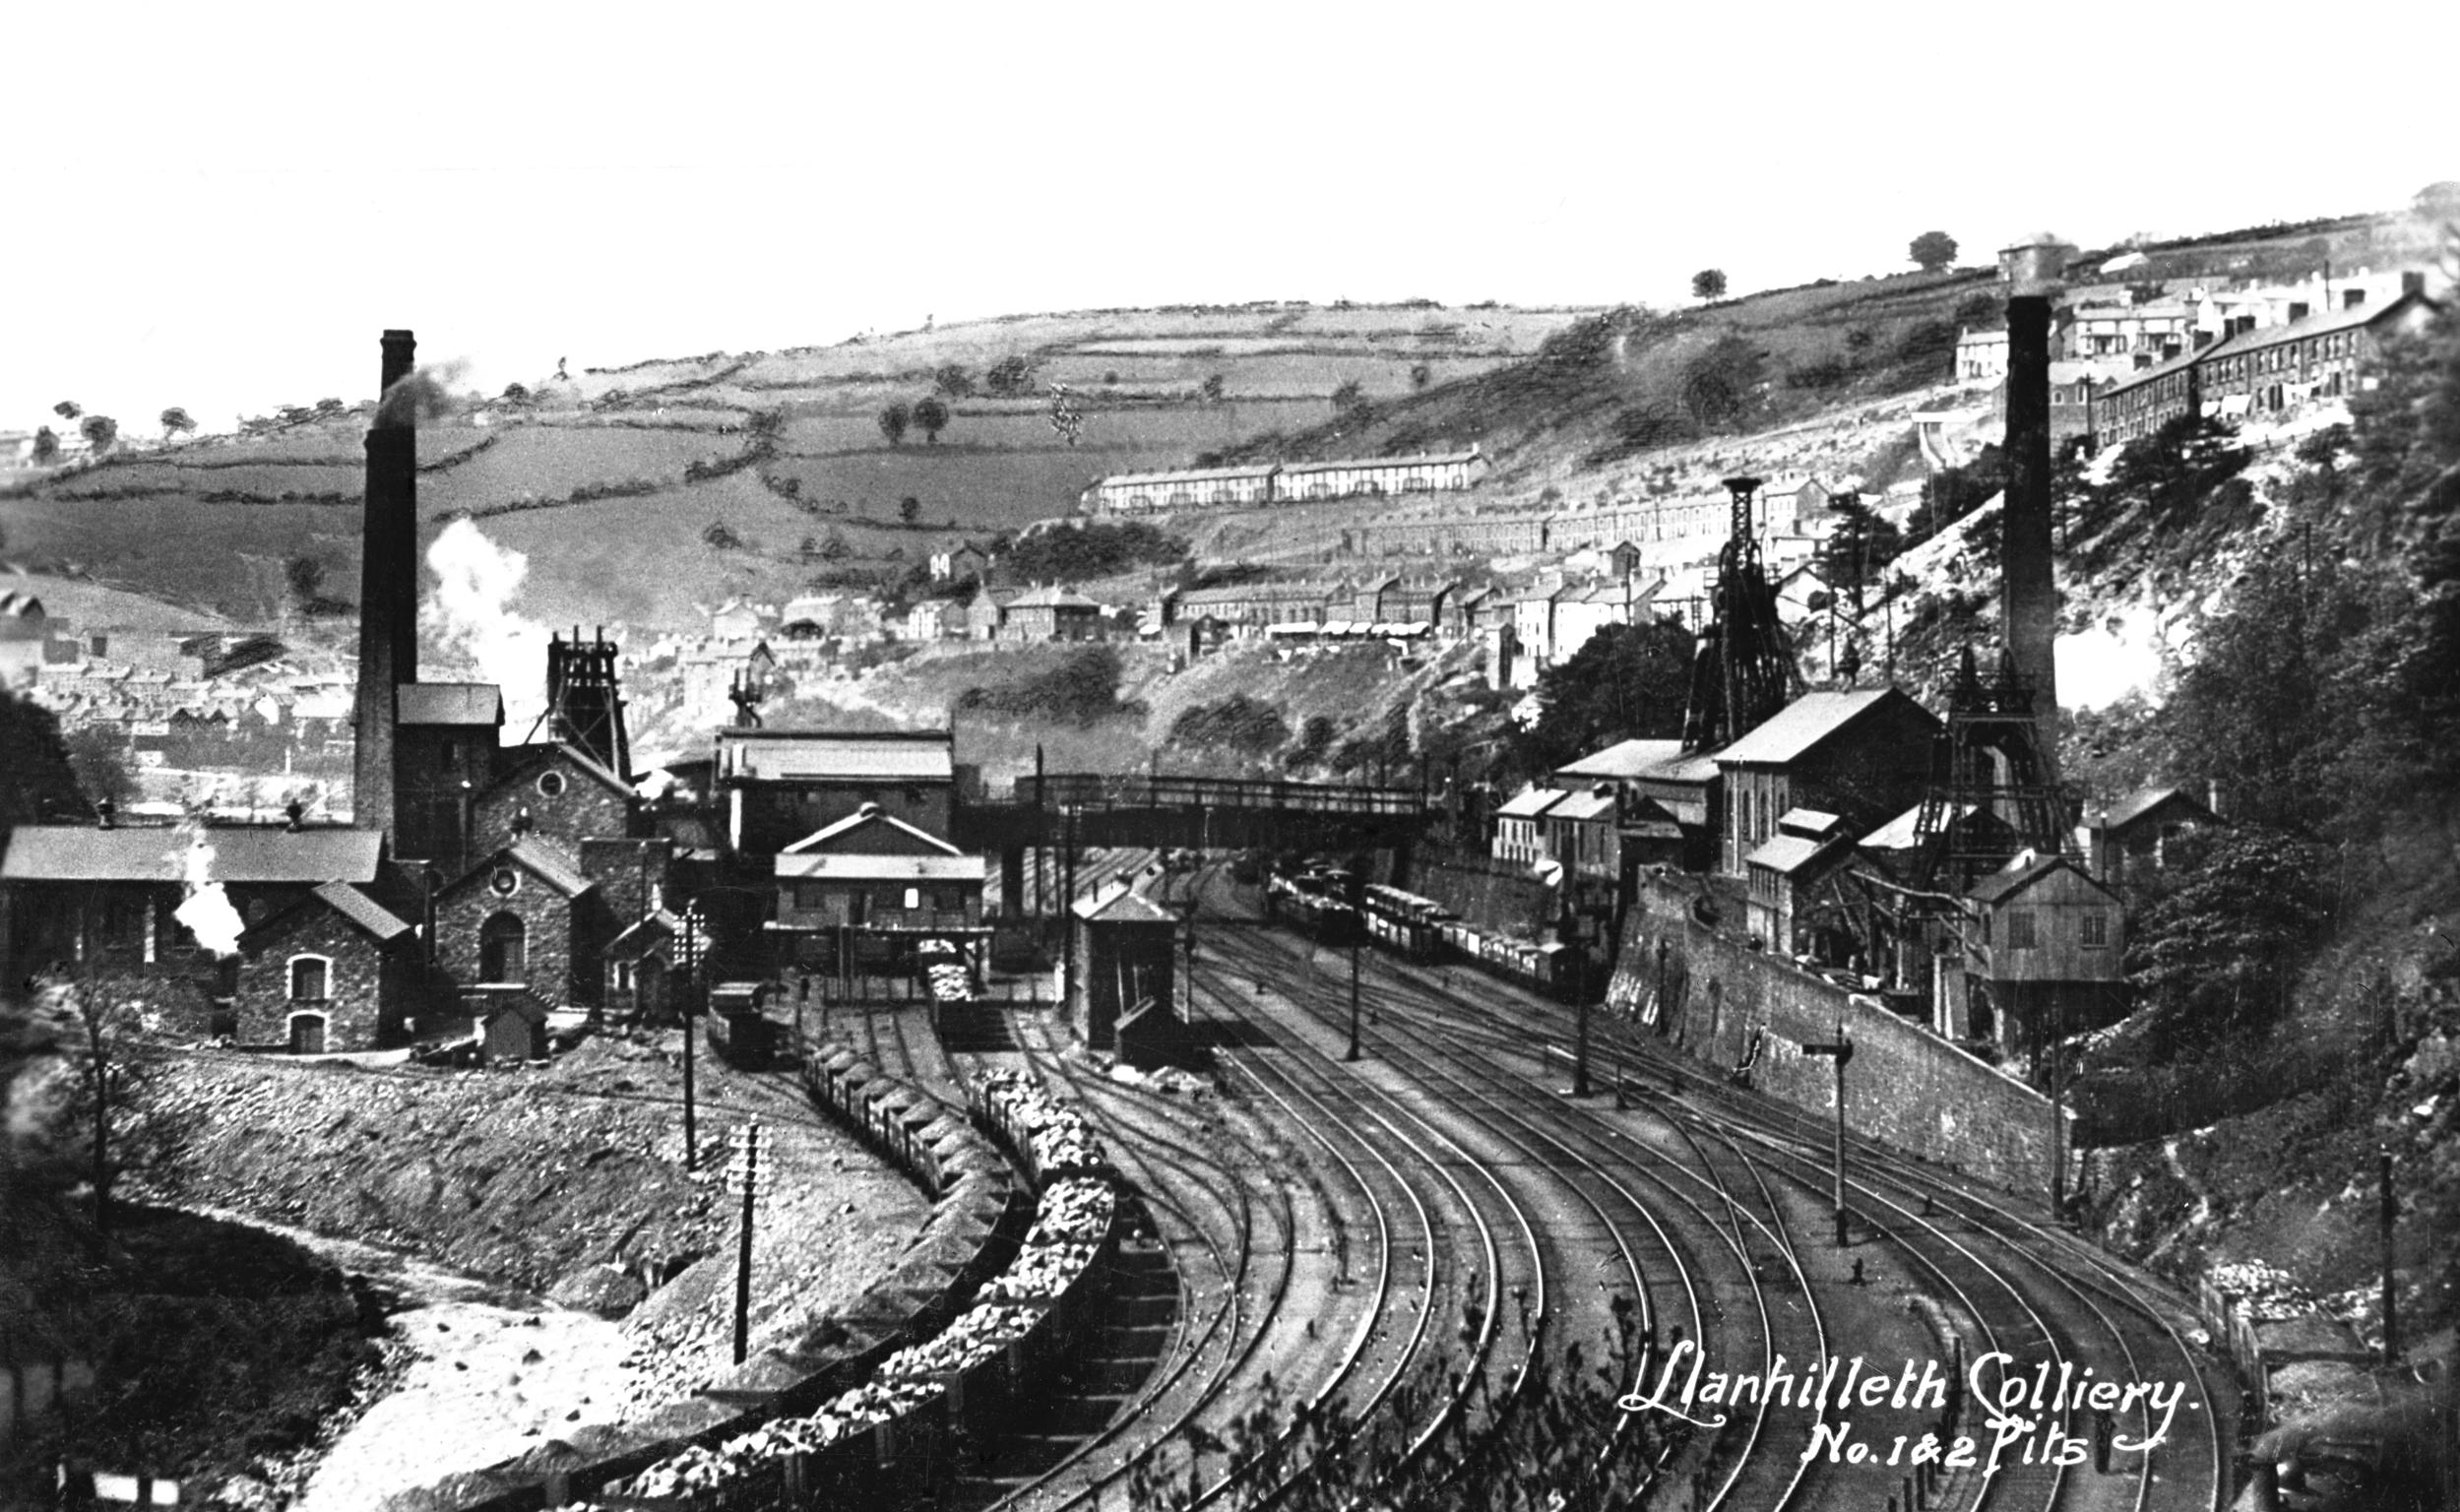 Llanhilleth Colliery, No.1 & 2 Pits (postcard)